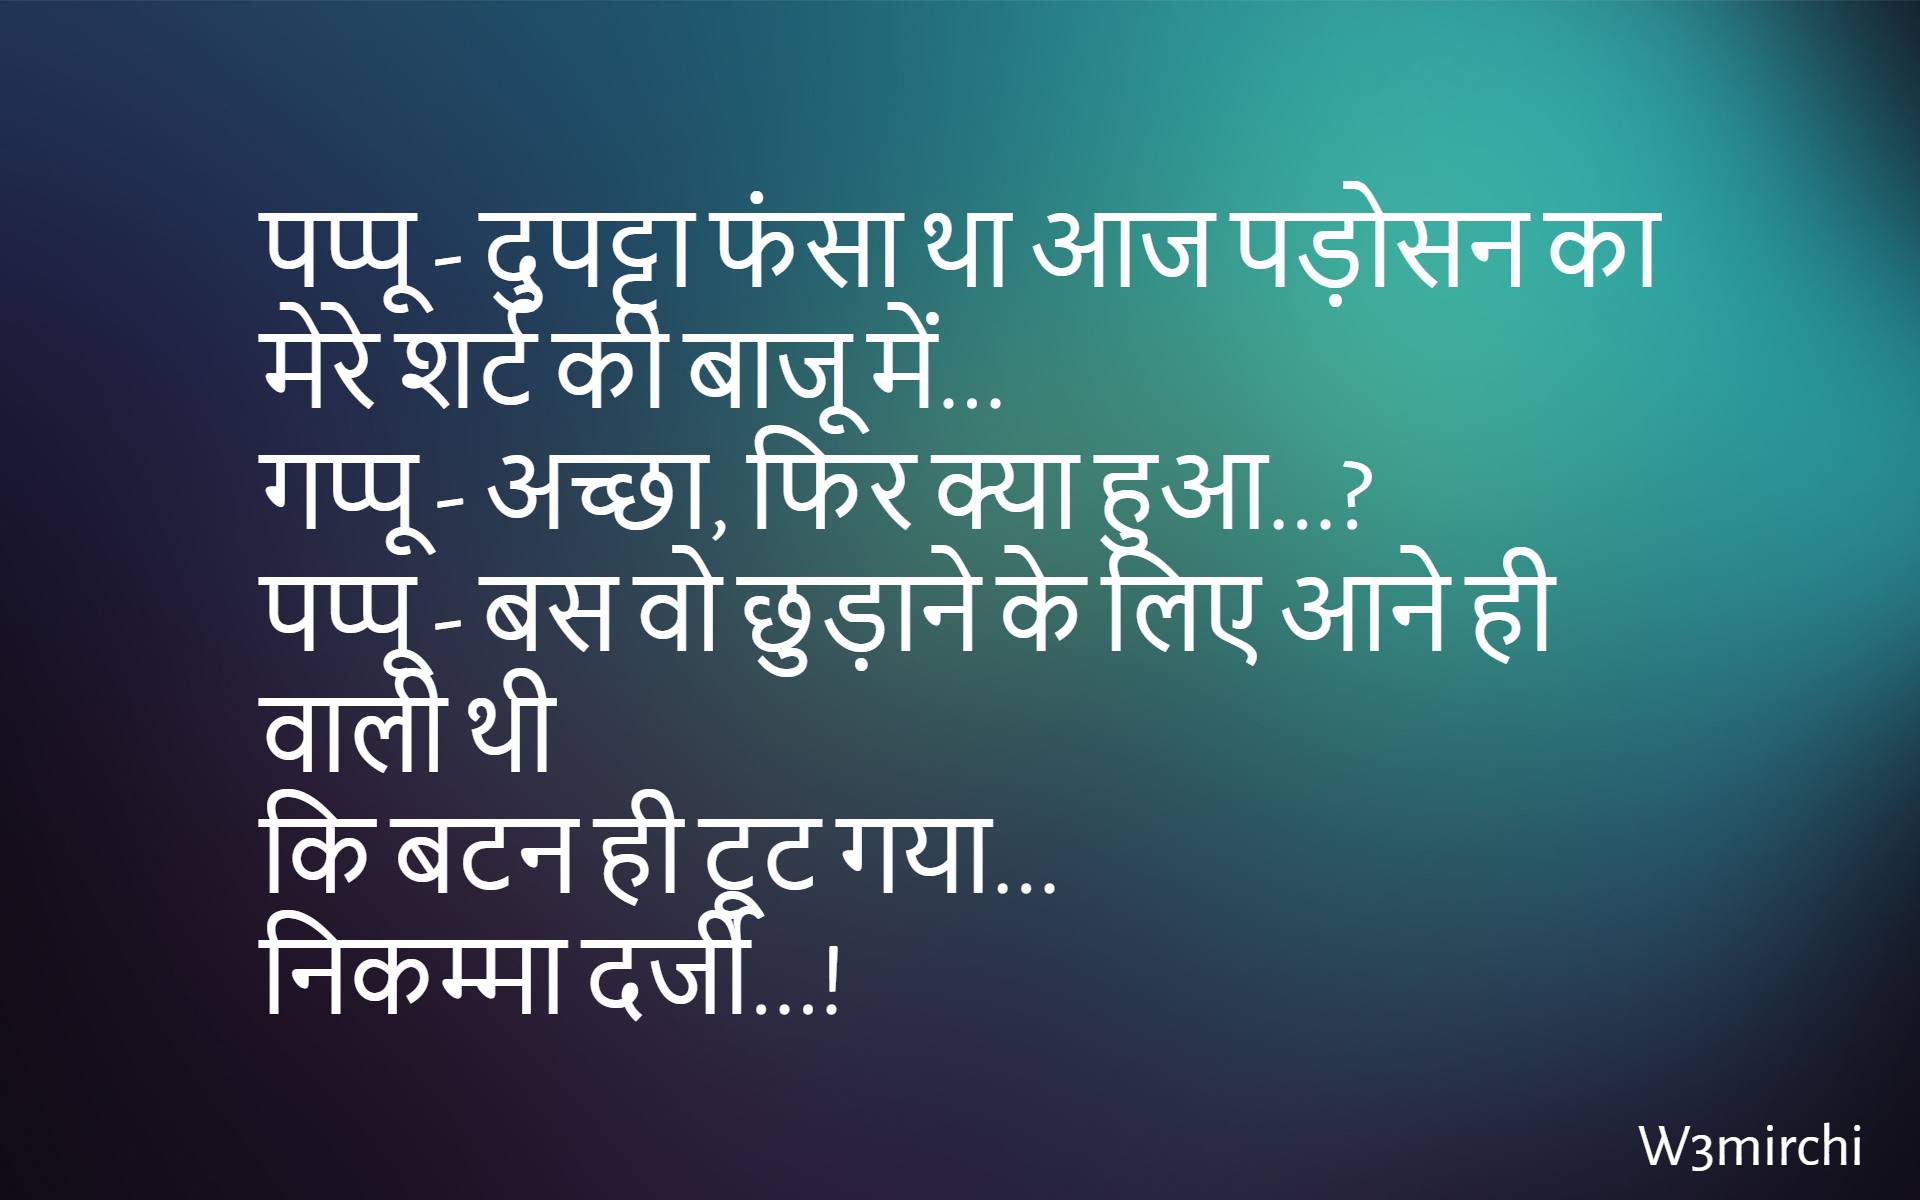 Darji(Tailor) Jokes in hindi